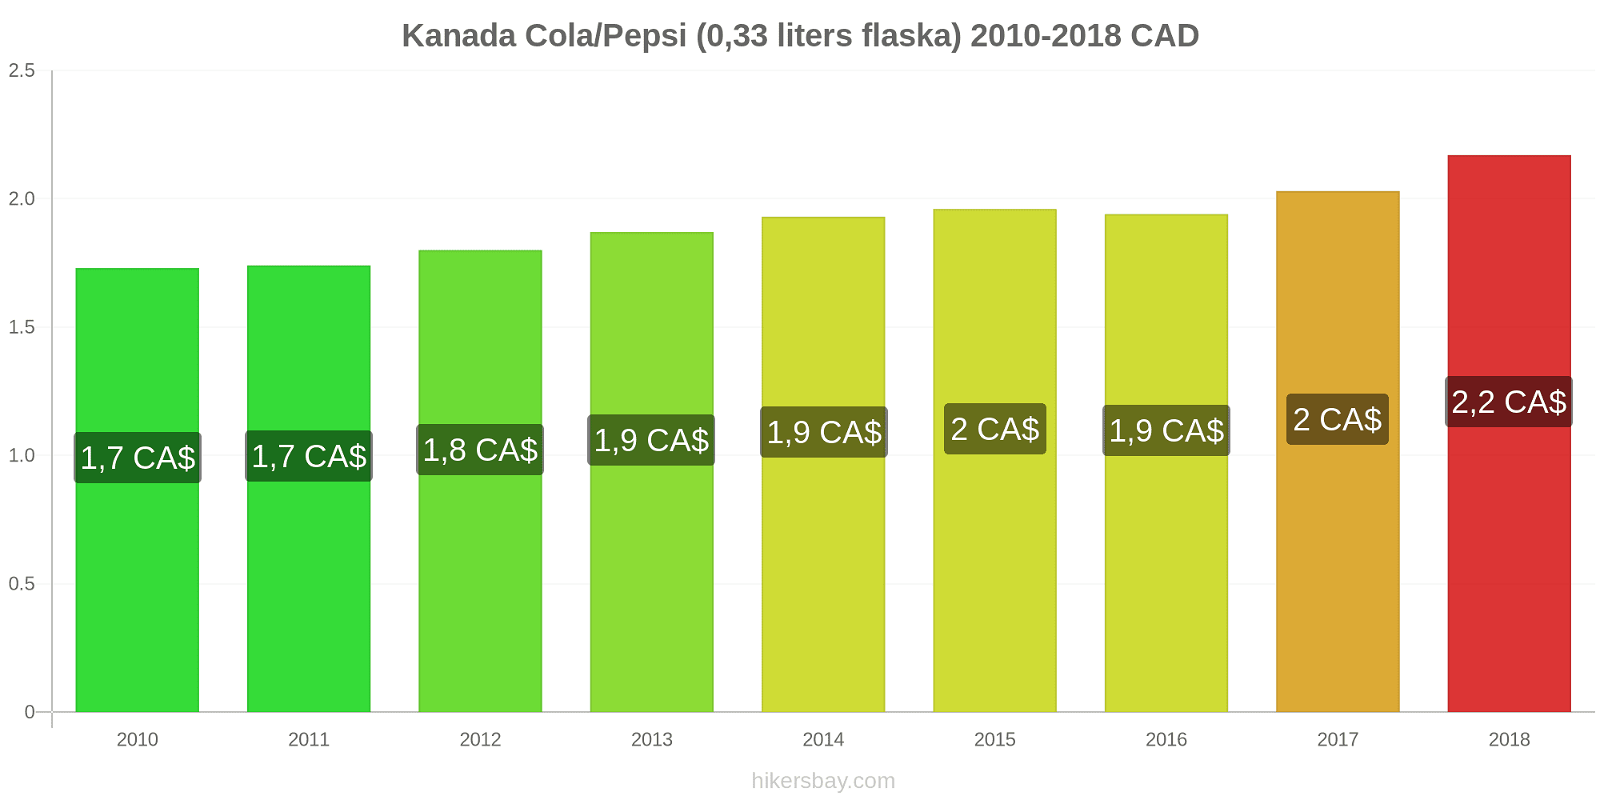 Kanada prisändringar Coca-Cola/Pepsi (0.33 liters flaska) hikersbay.com